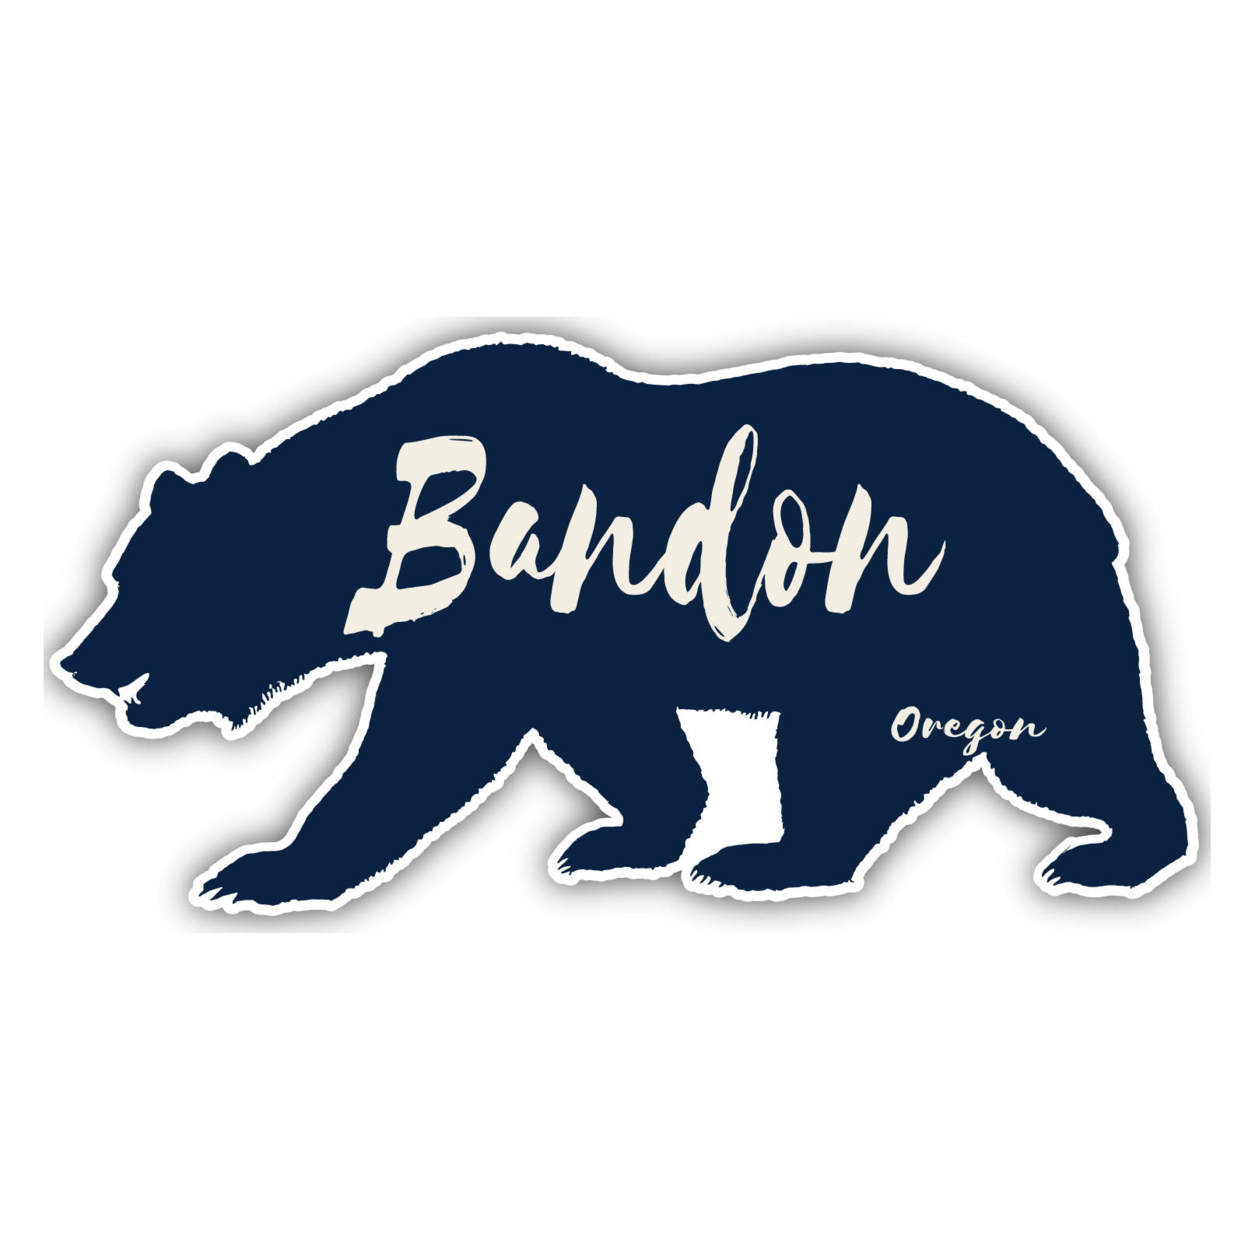 Bandon Oregon Souvenir Decorative Stickers (Choose Theme And Size) - 4-Pack, 8-Inch, Tent